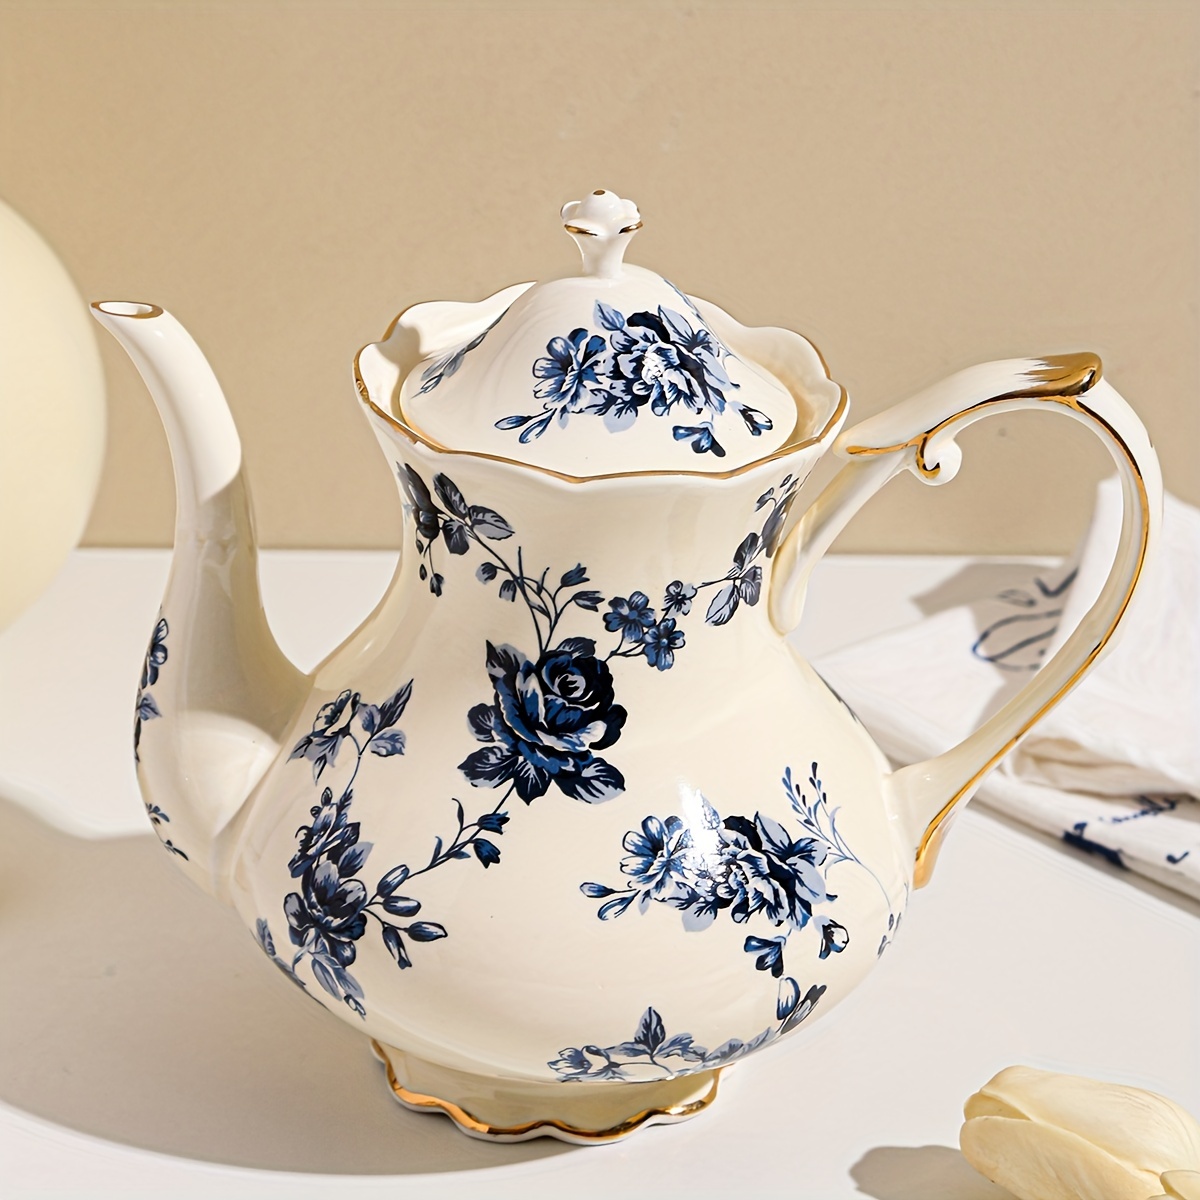 Blue & White Tea or Coffee Pots